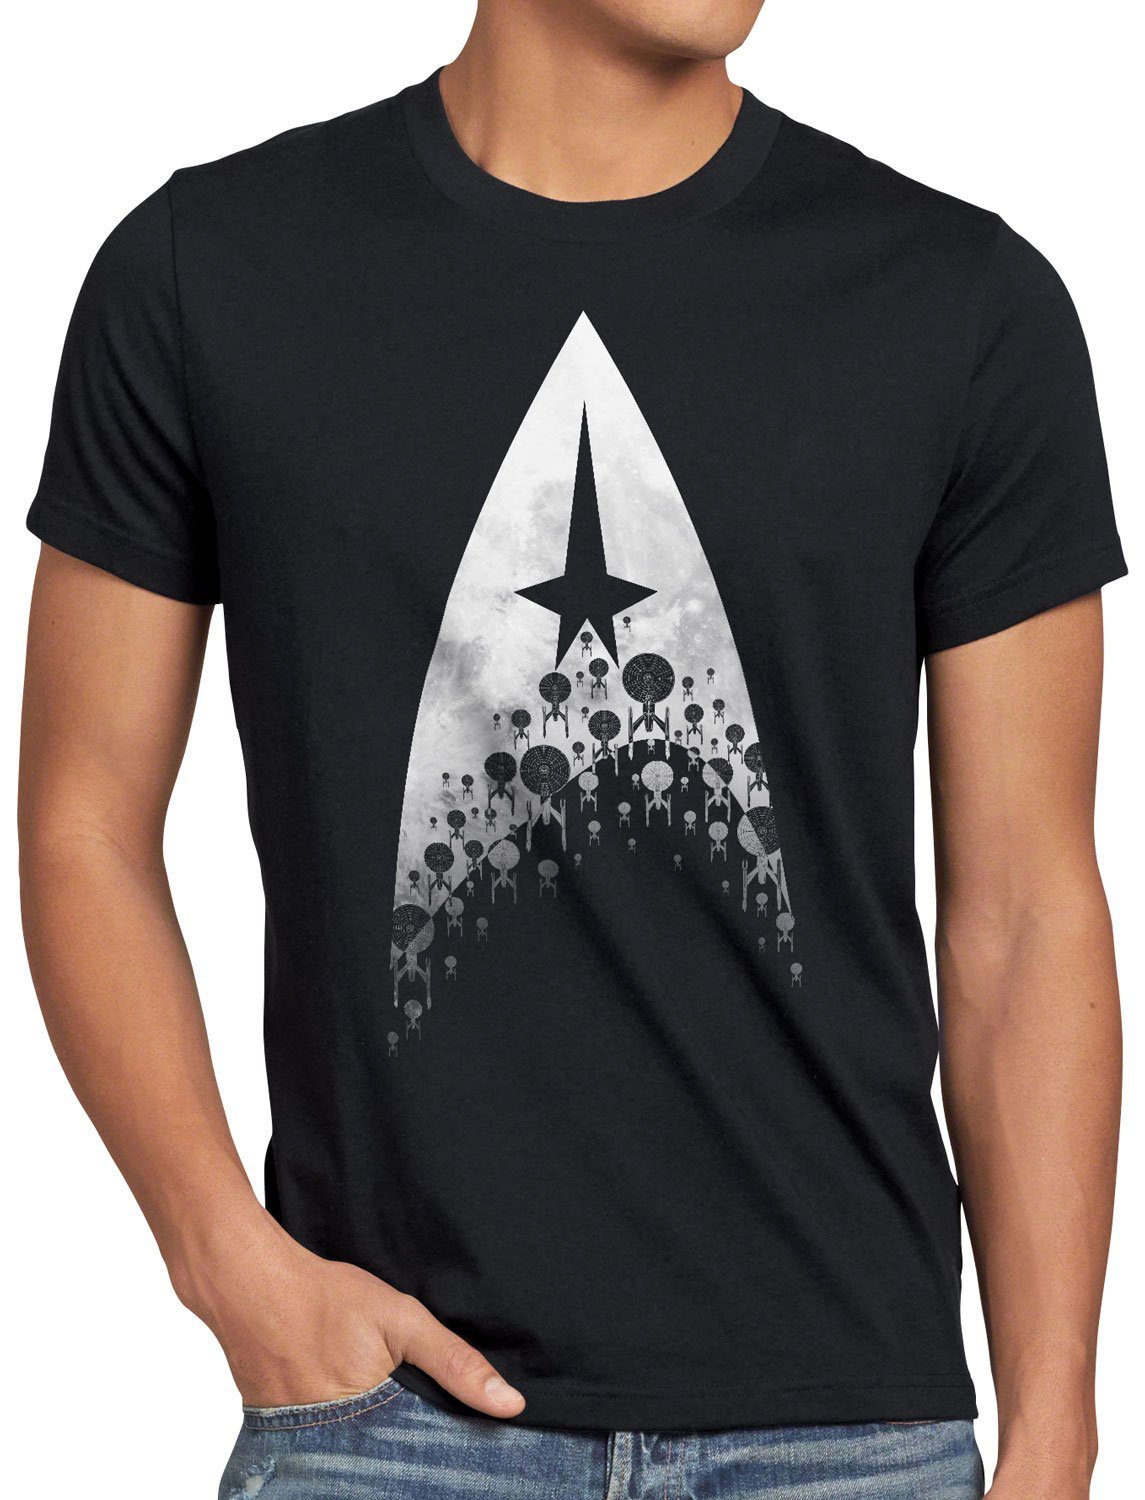 Print-Shirt trekkie T-Shirt voyager Starfleet Herren style3 enterprise